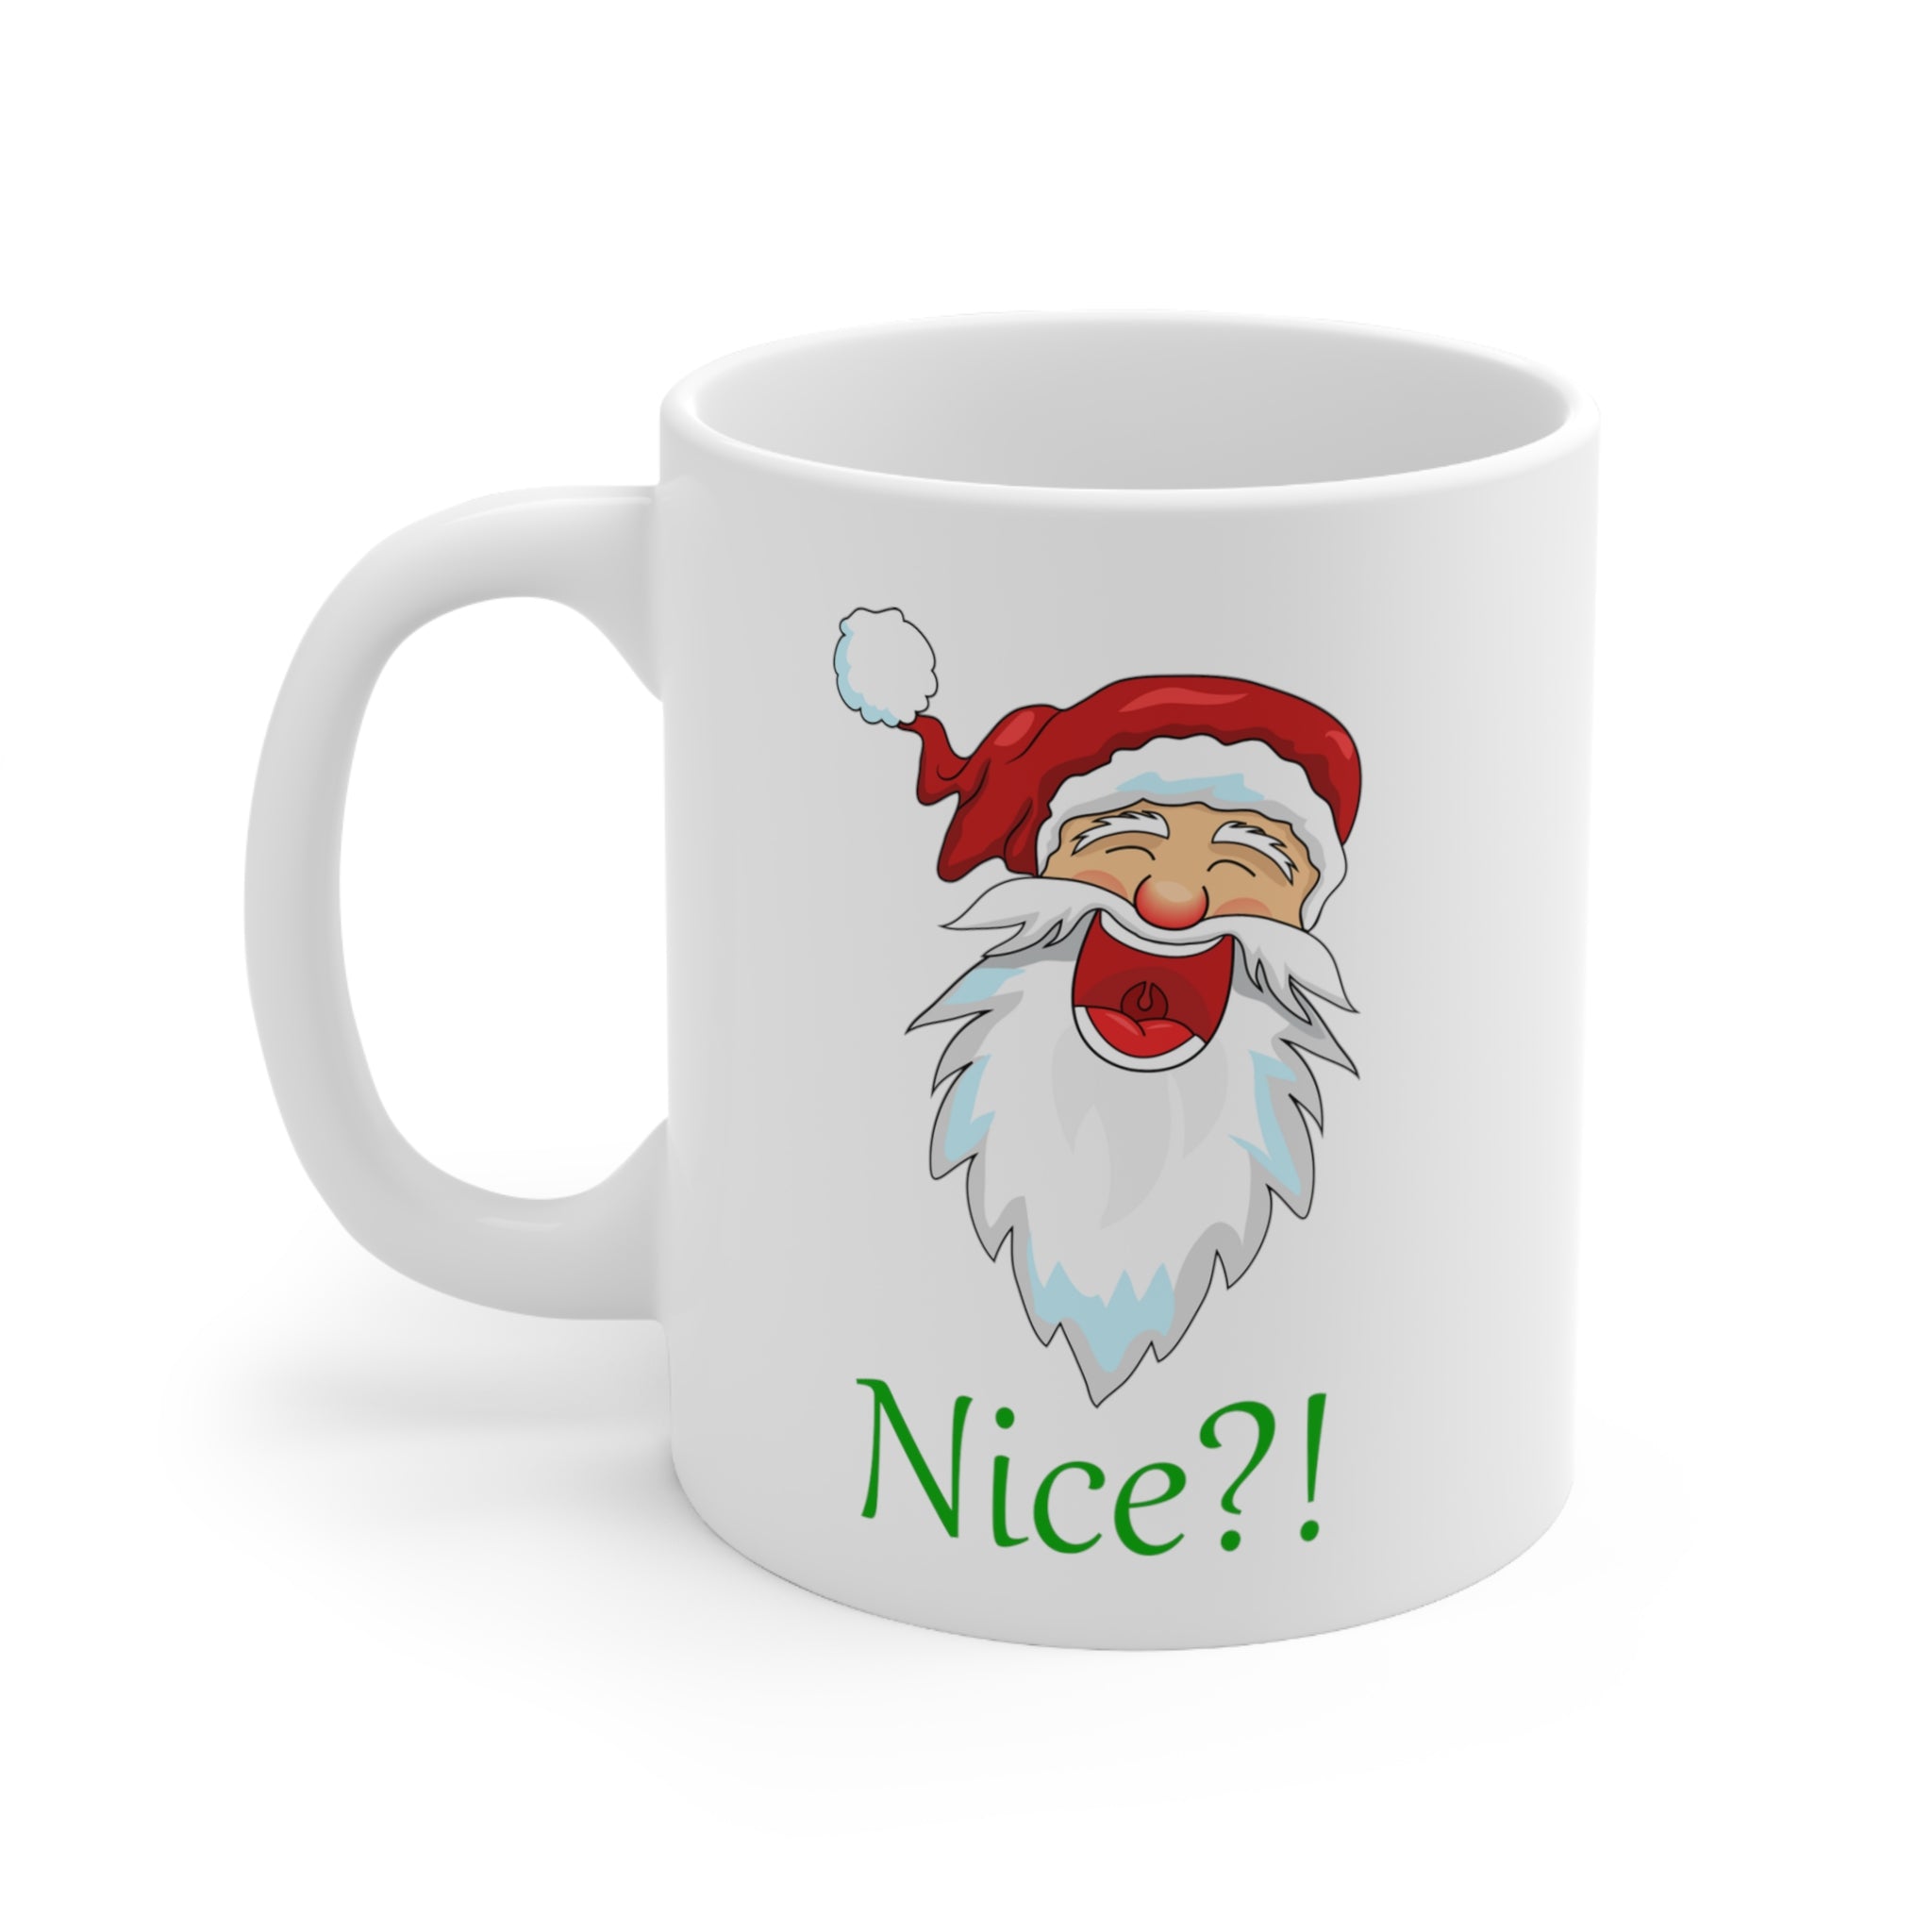 11 oz ceramic mug with a laughing Santa and the word 'Nice'